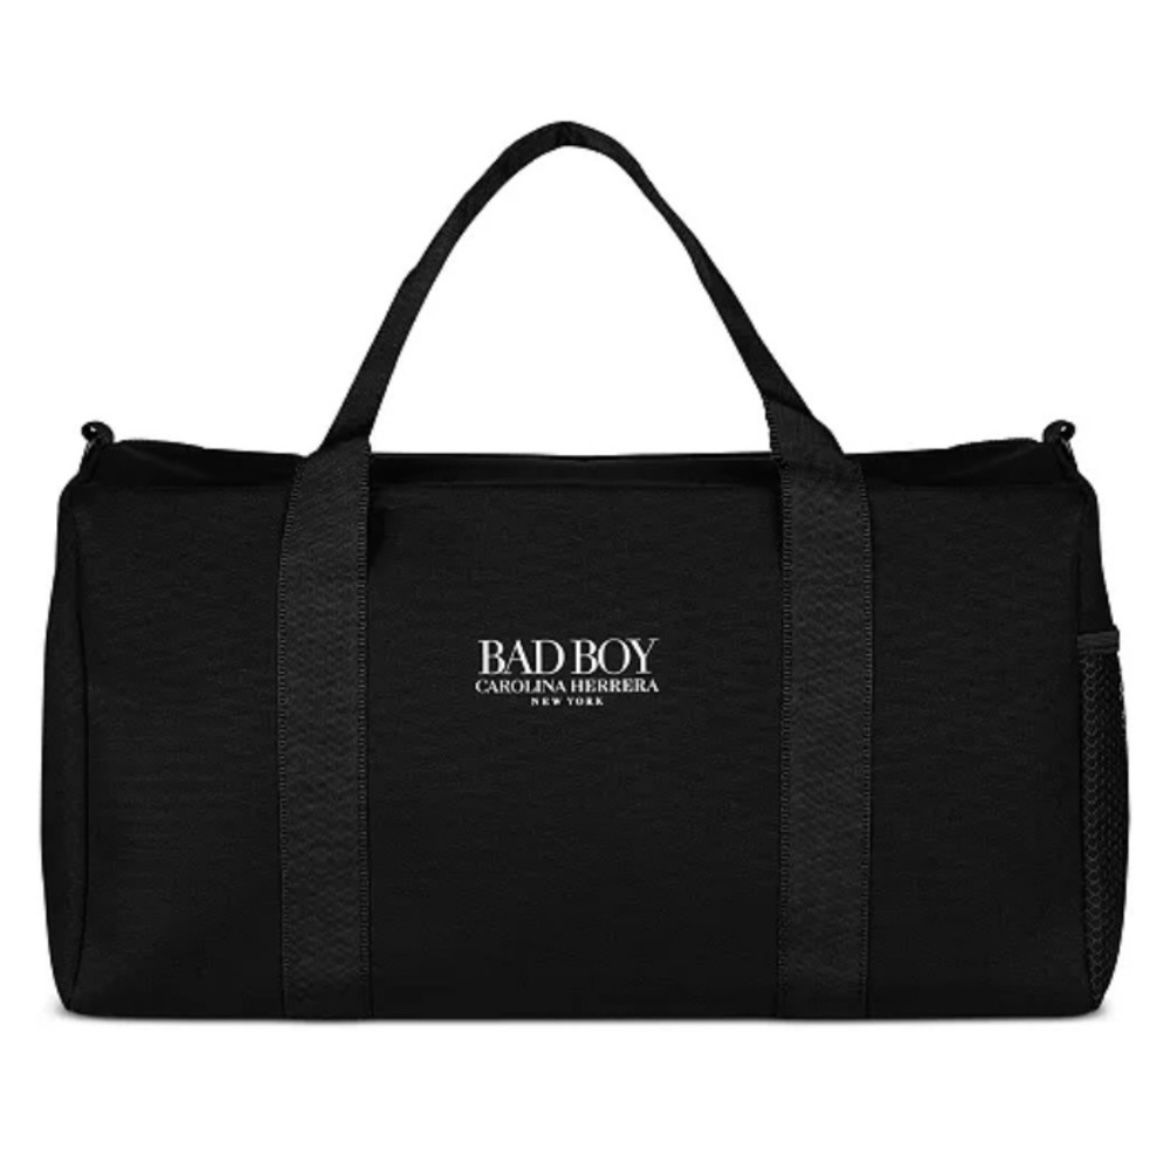 Carolina Herrera “Bad Boy” Duffle Bag/ Weekender Bag 